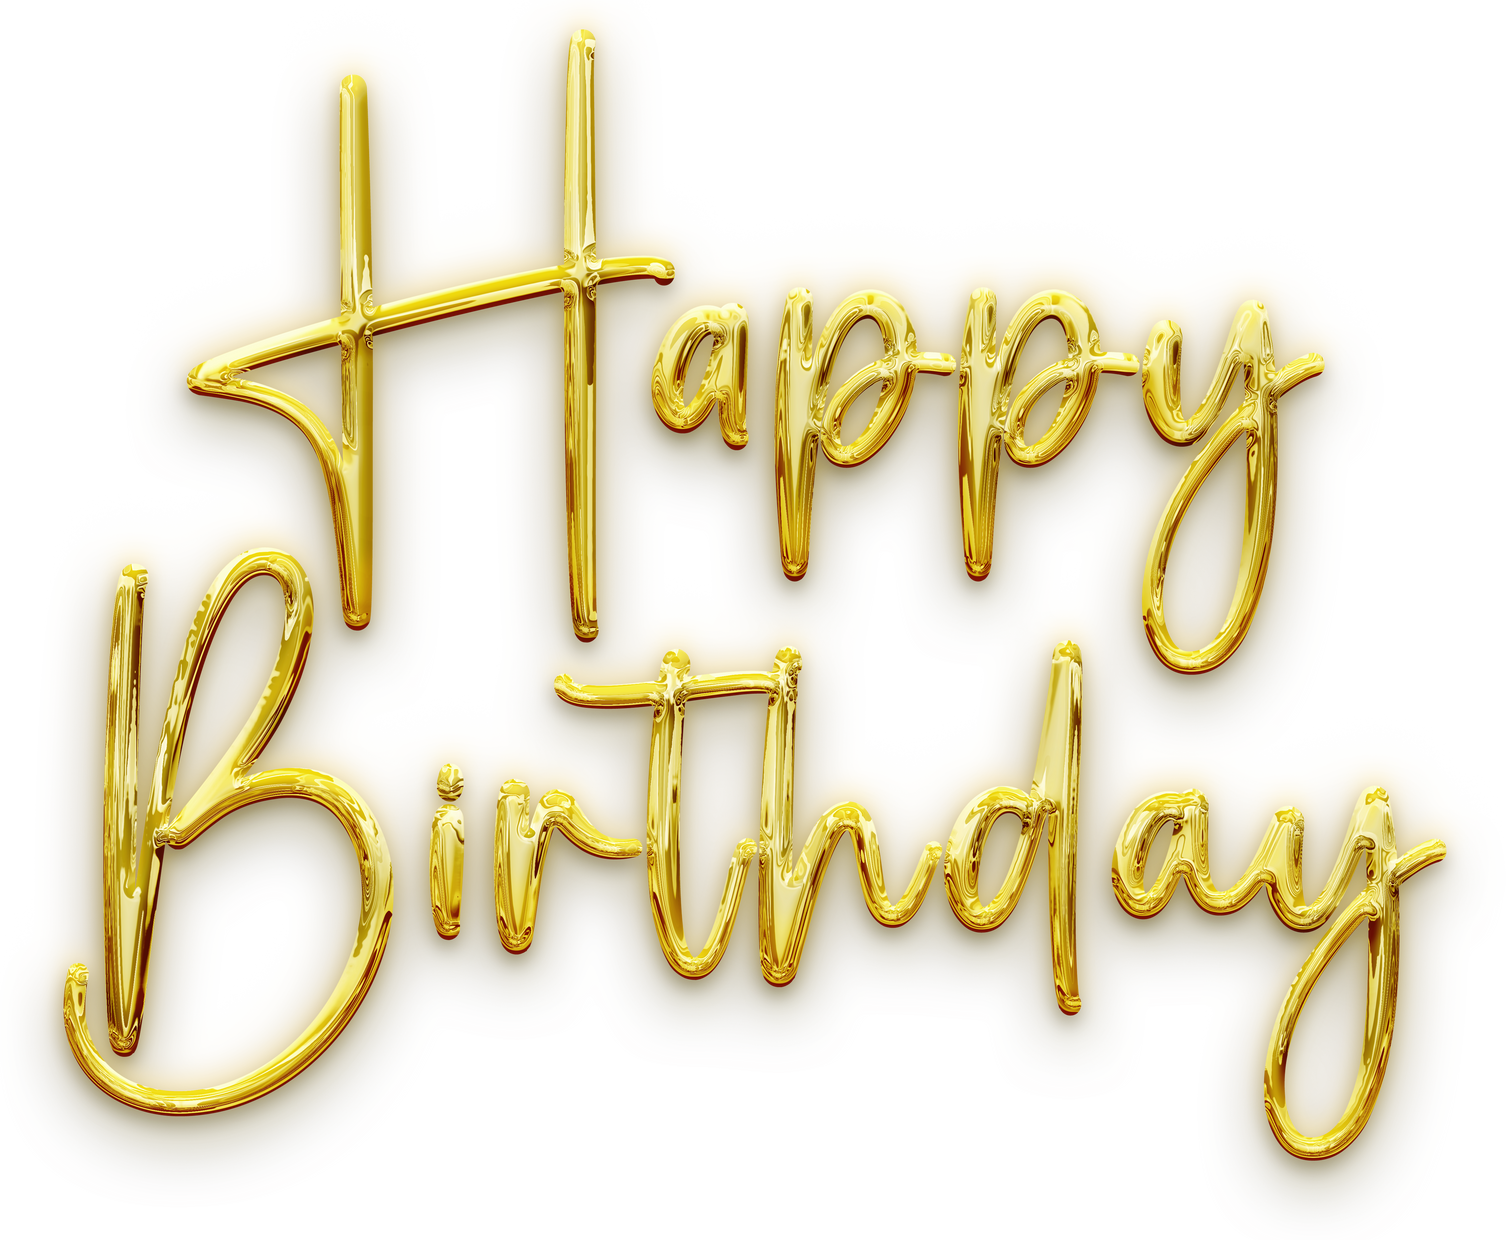 Golden volumetric 3D Text inscription Happy Birthday cut out